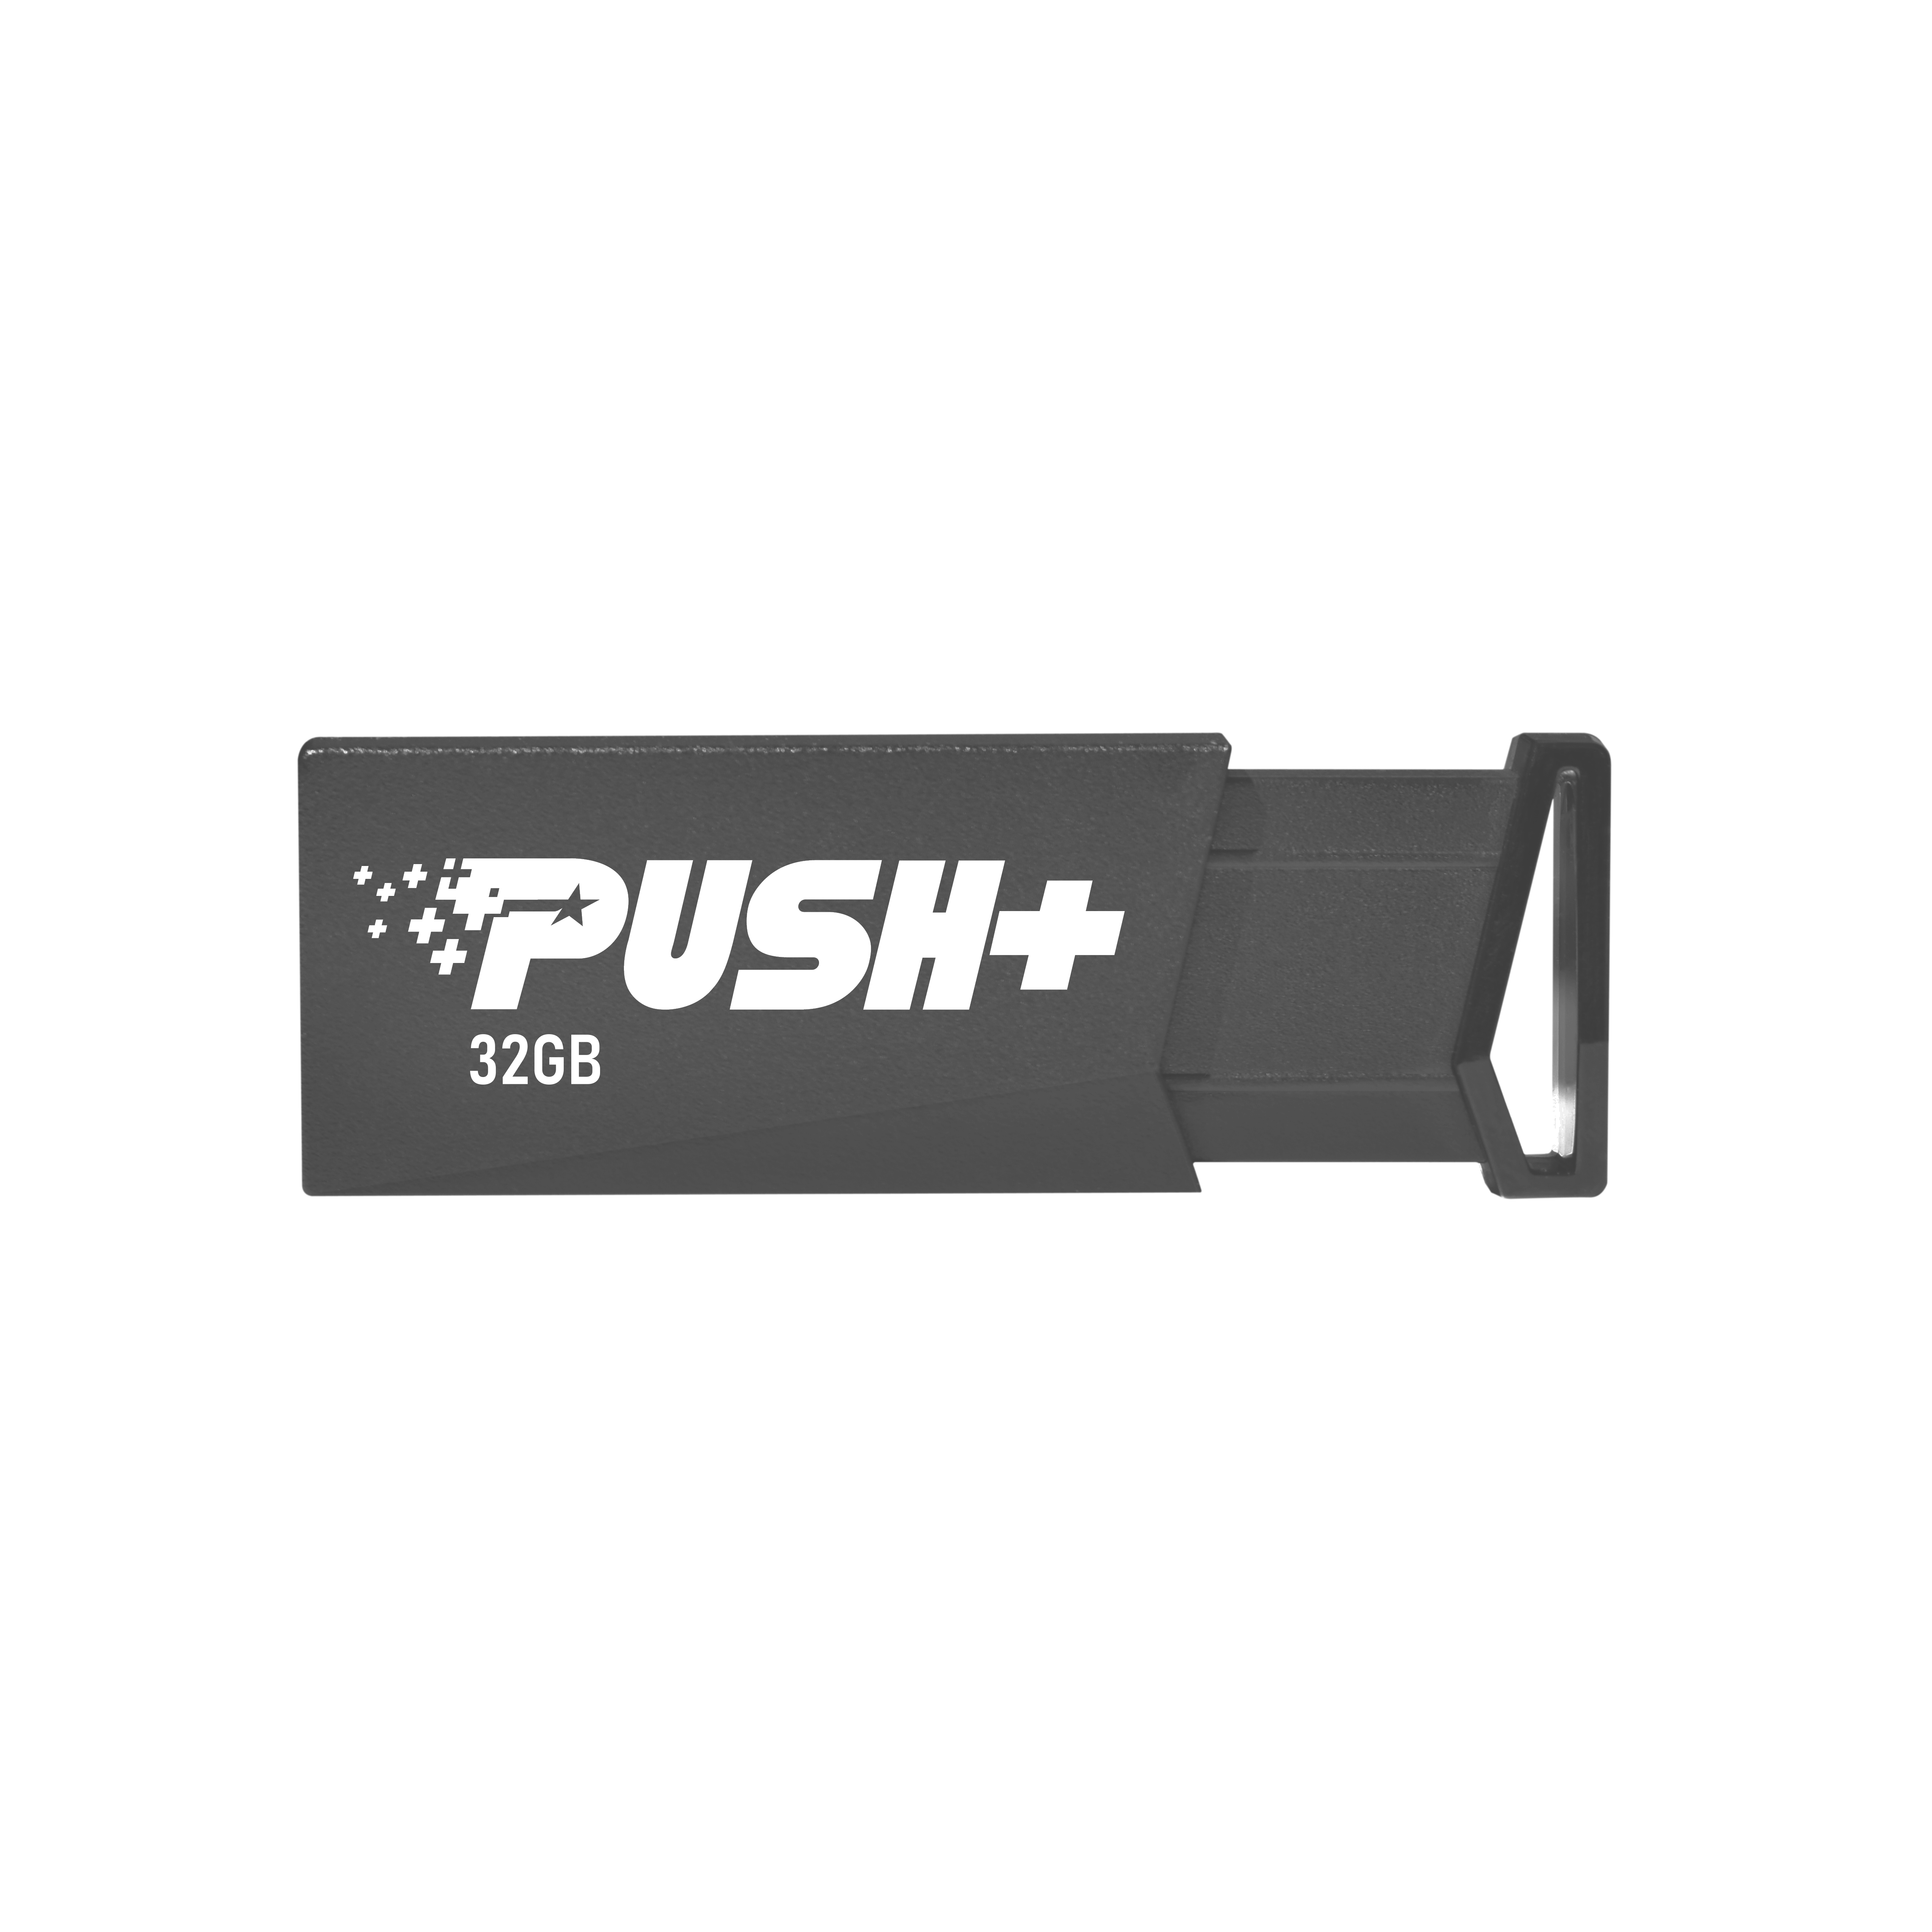 Patriot Push+ 32GB USB 3.2 Gen 1 Type-A Flash Drive - Thumb Drive - Pen Drive - PSF32GPSHB32U - image 2 of 3